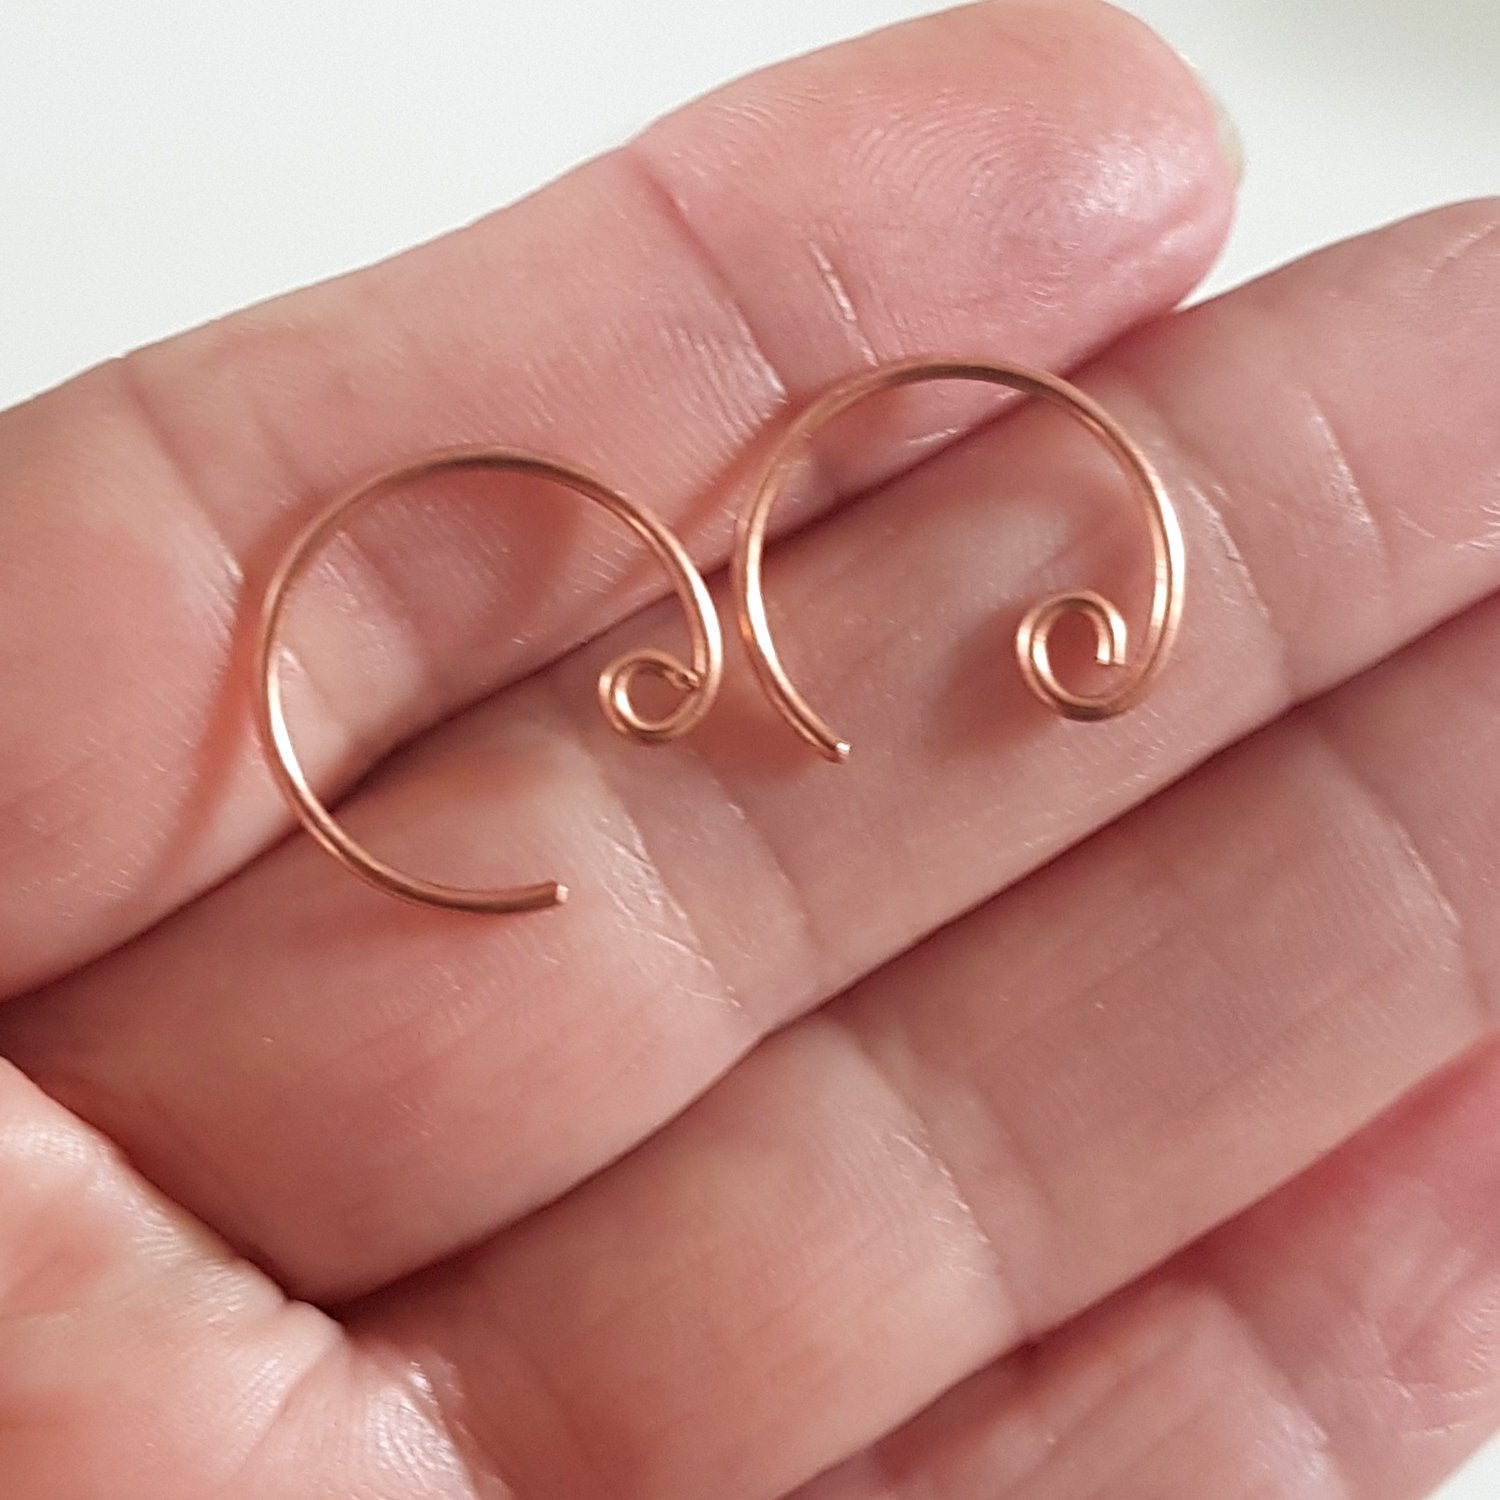 Copper Circle Artisan Earring Hooks BULK 6 pcs | C006EH-3 | Jewellery Supply - Kalitheo Jewellery